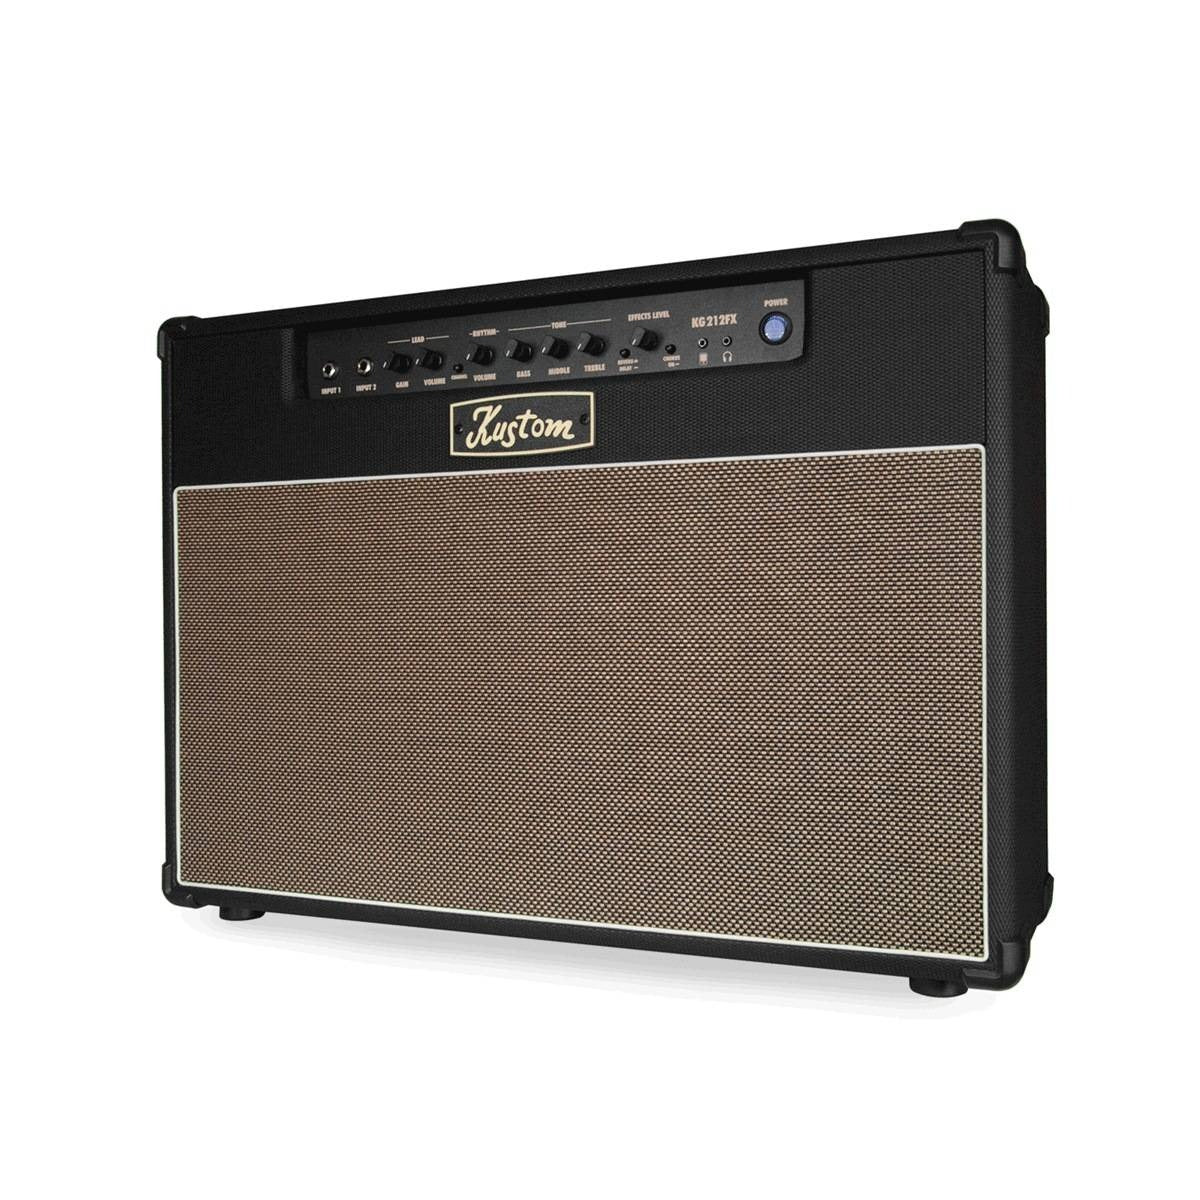 Kustom KG212FX 30W Guitar Combo Amplifier (2 x 12Inch Speakers)